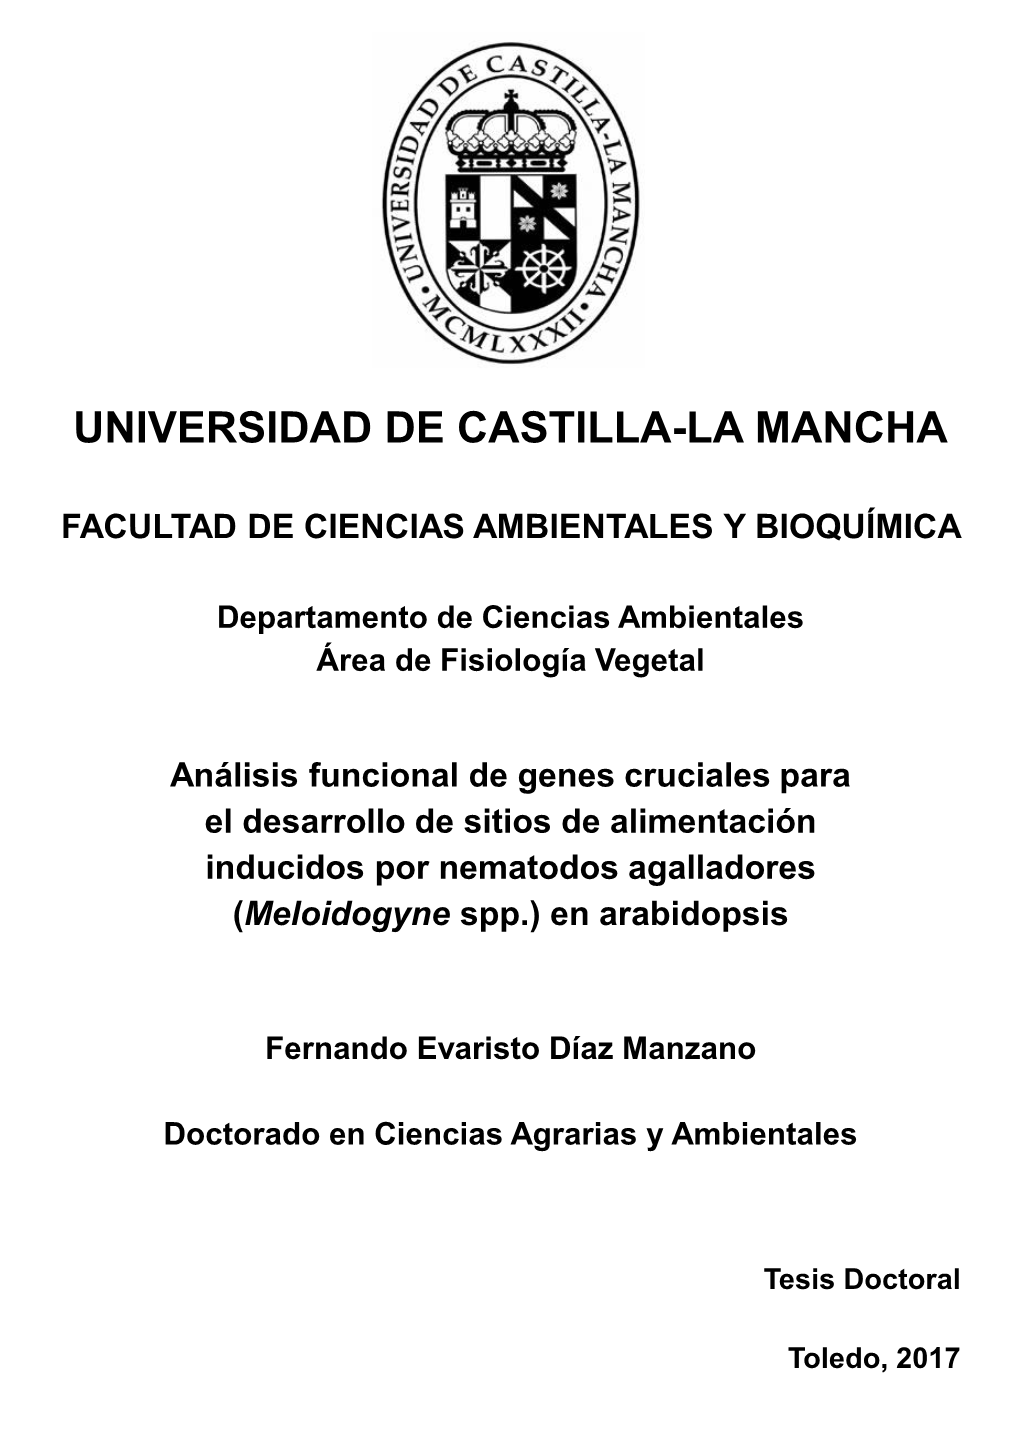 University of Castilla-La Mancha Faculty of Environmental Sciences and Biochemistry